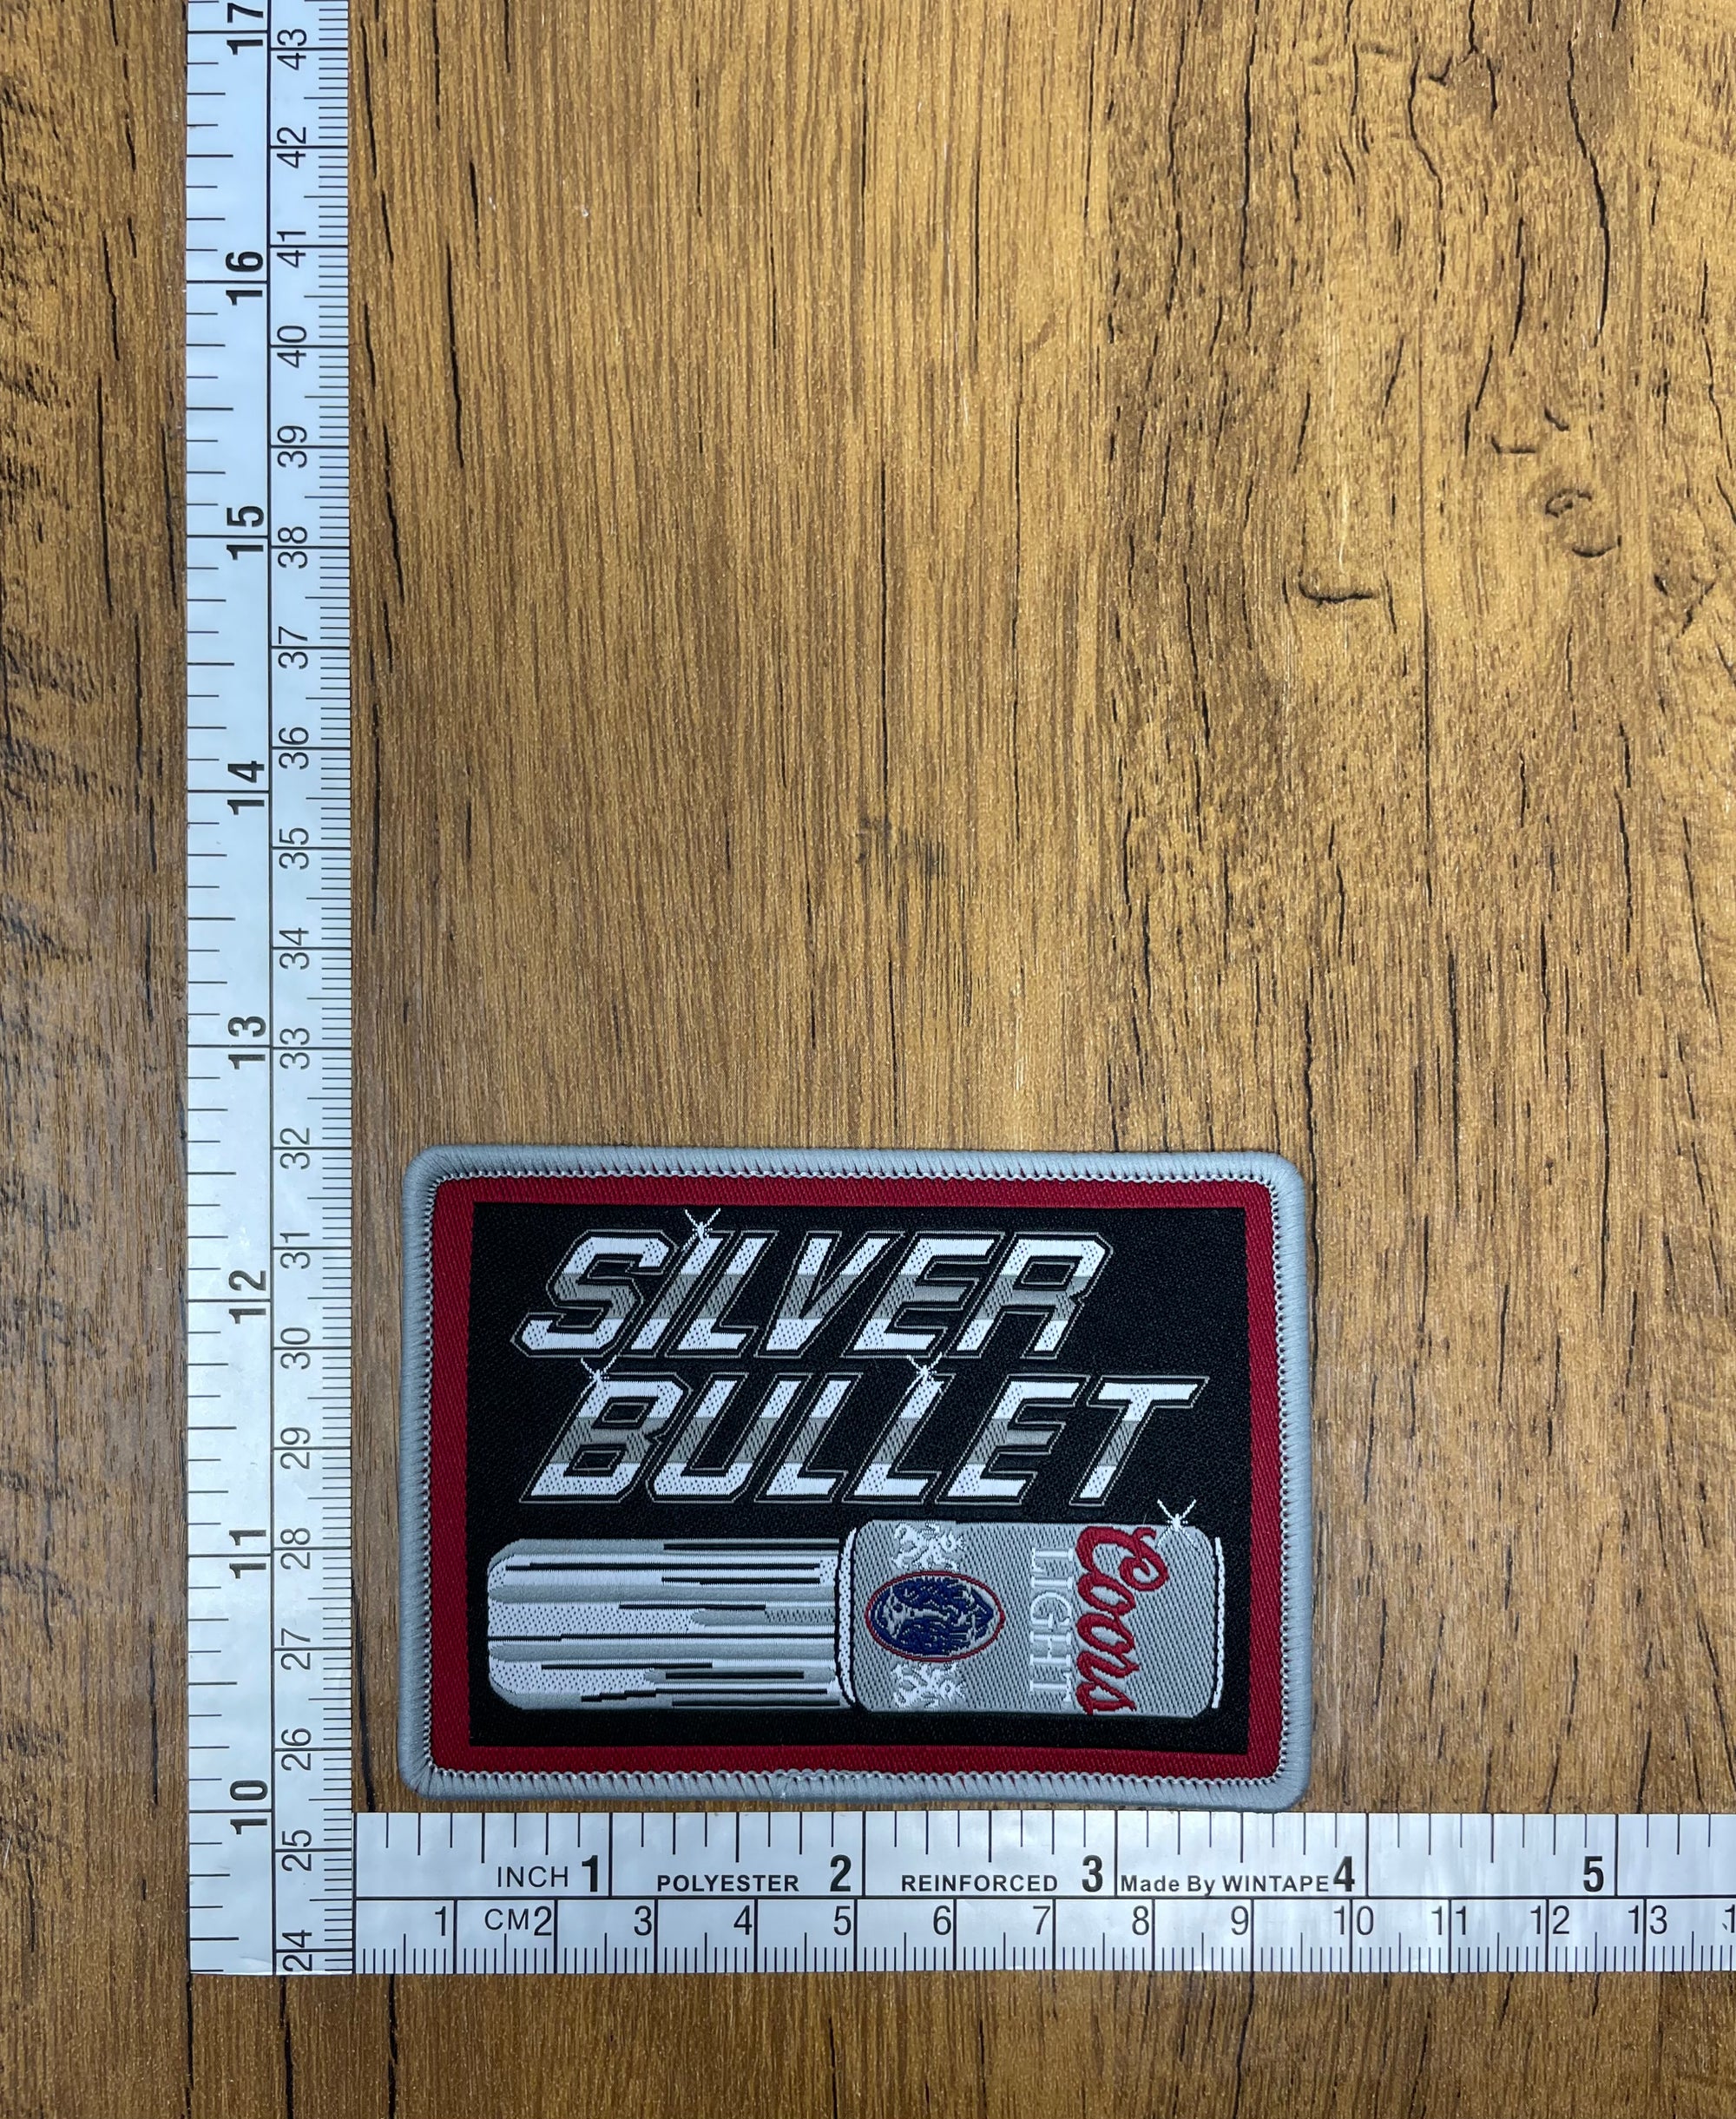 Silver Bullet